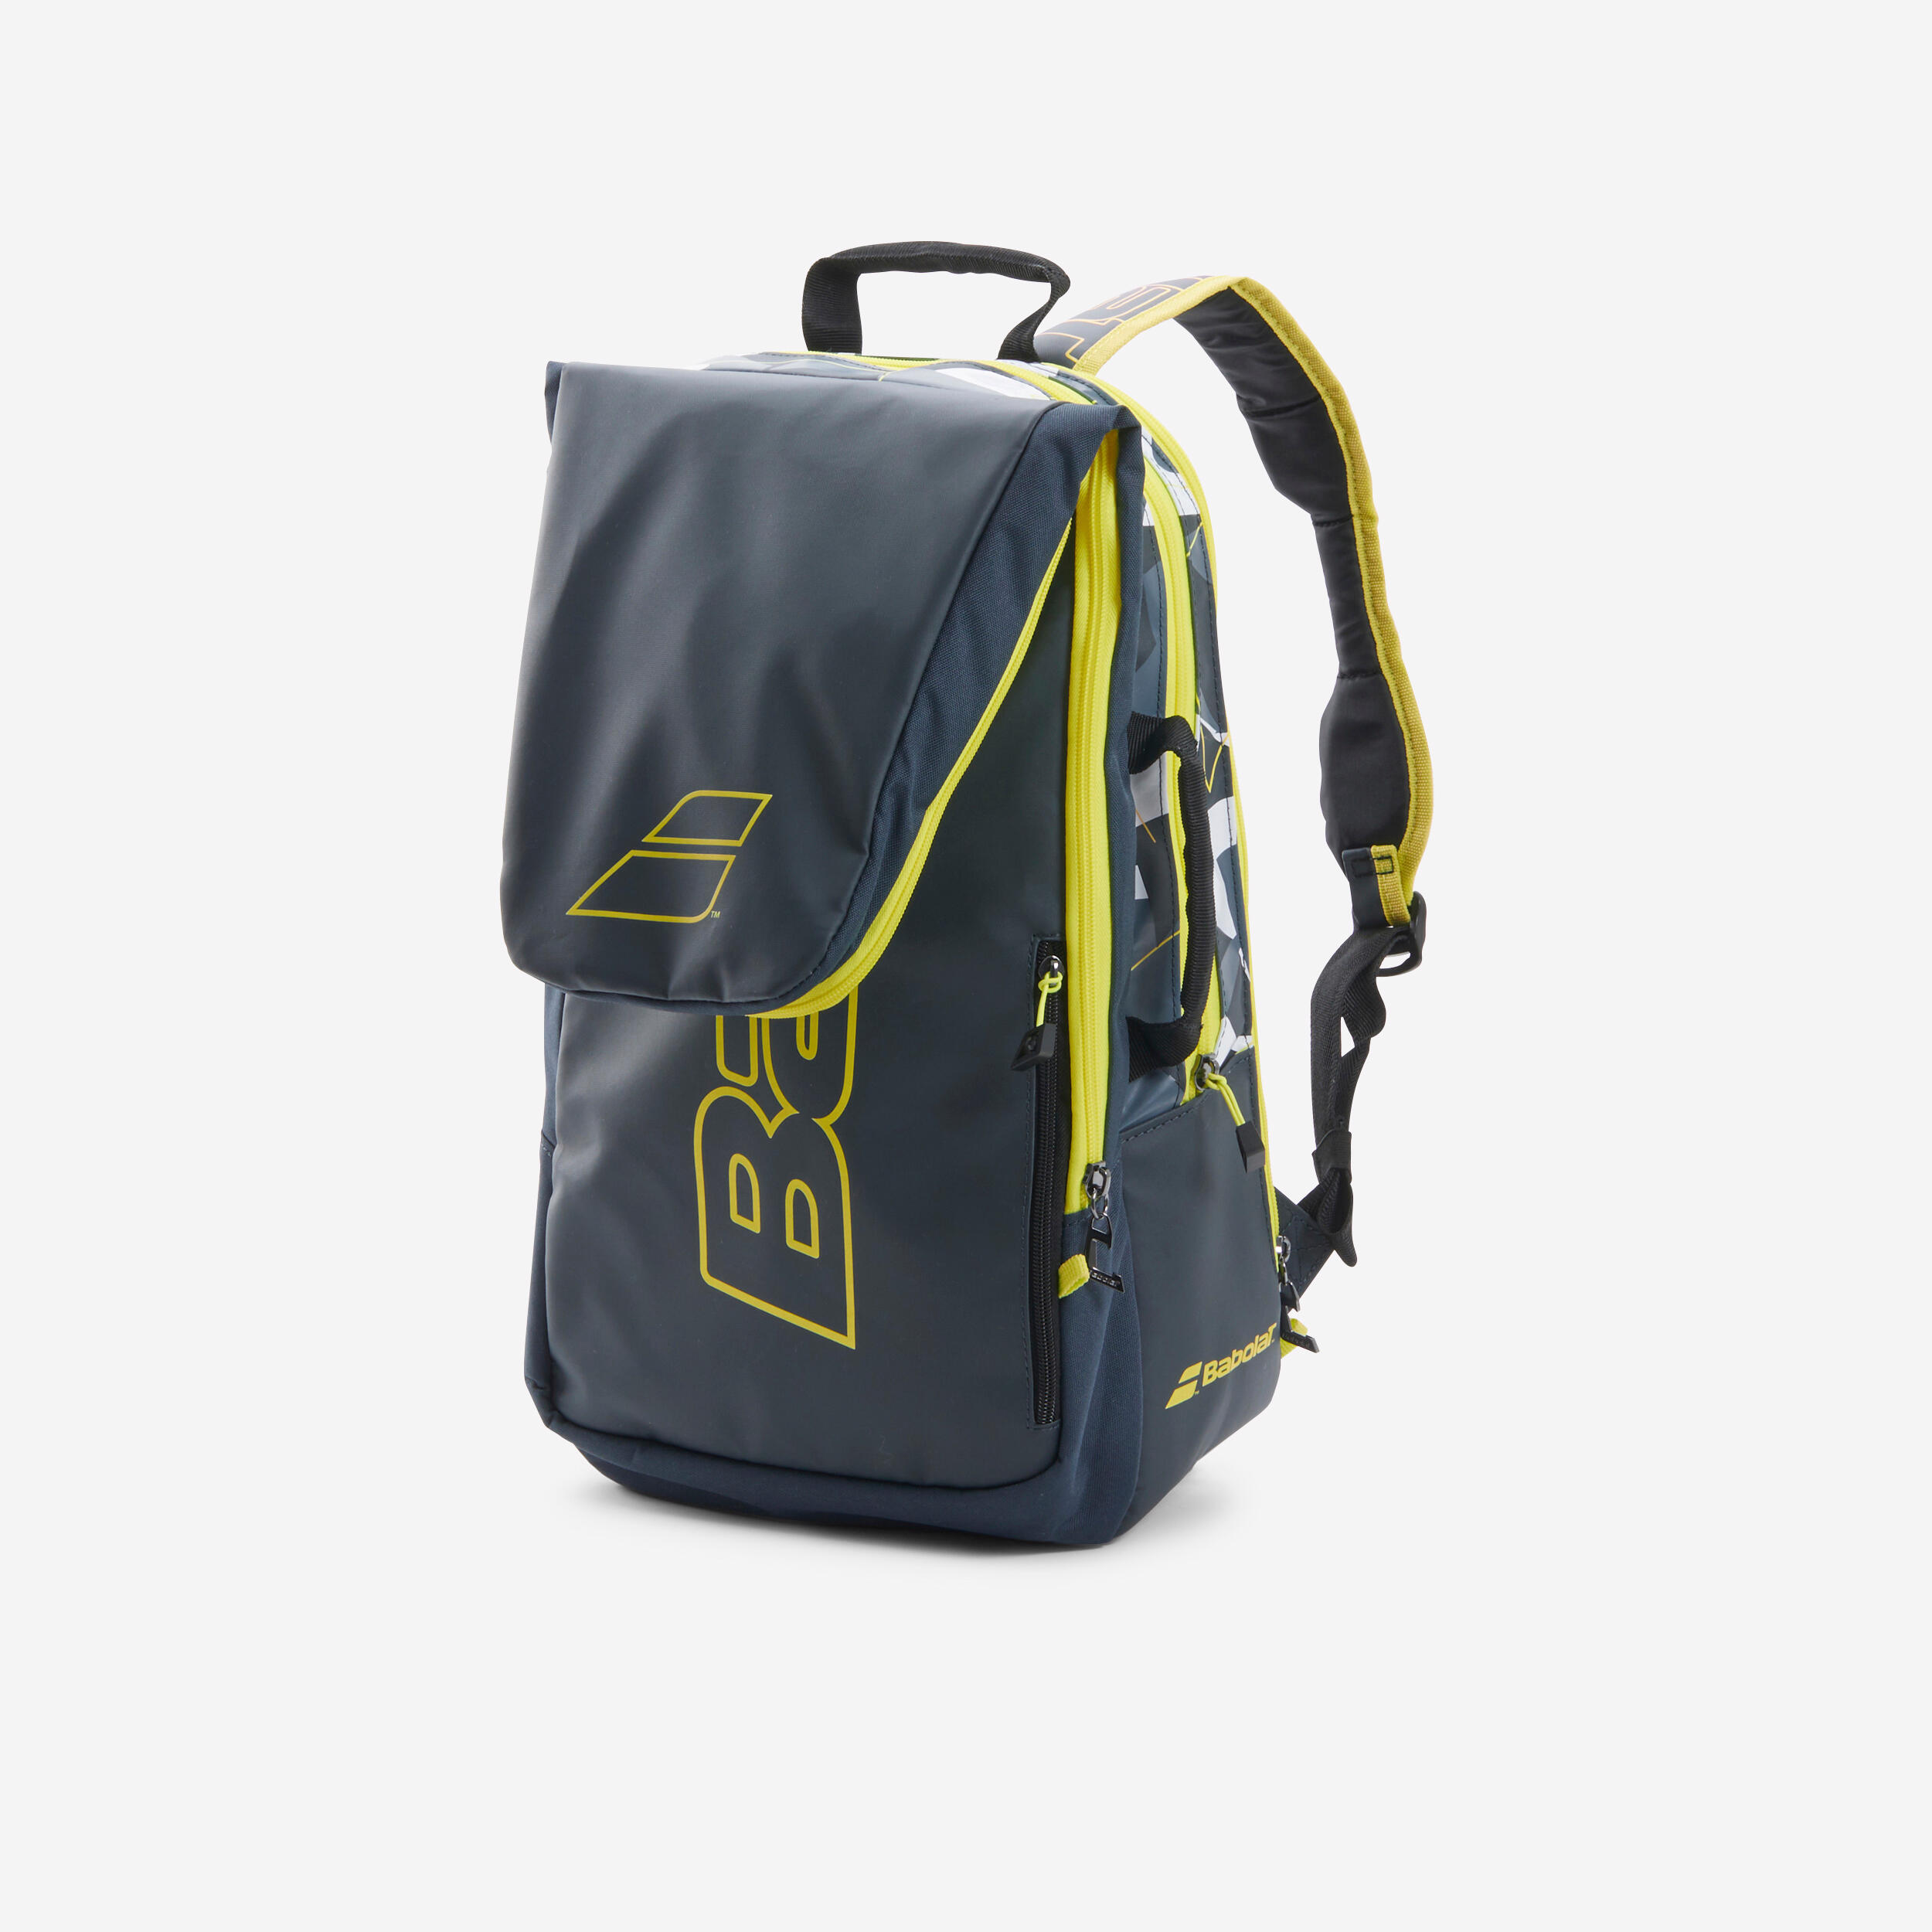 Ryggsäck För Tennis - Pure Aero 32 L Grå/gul